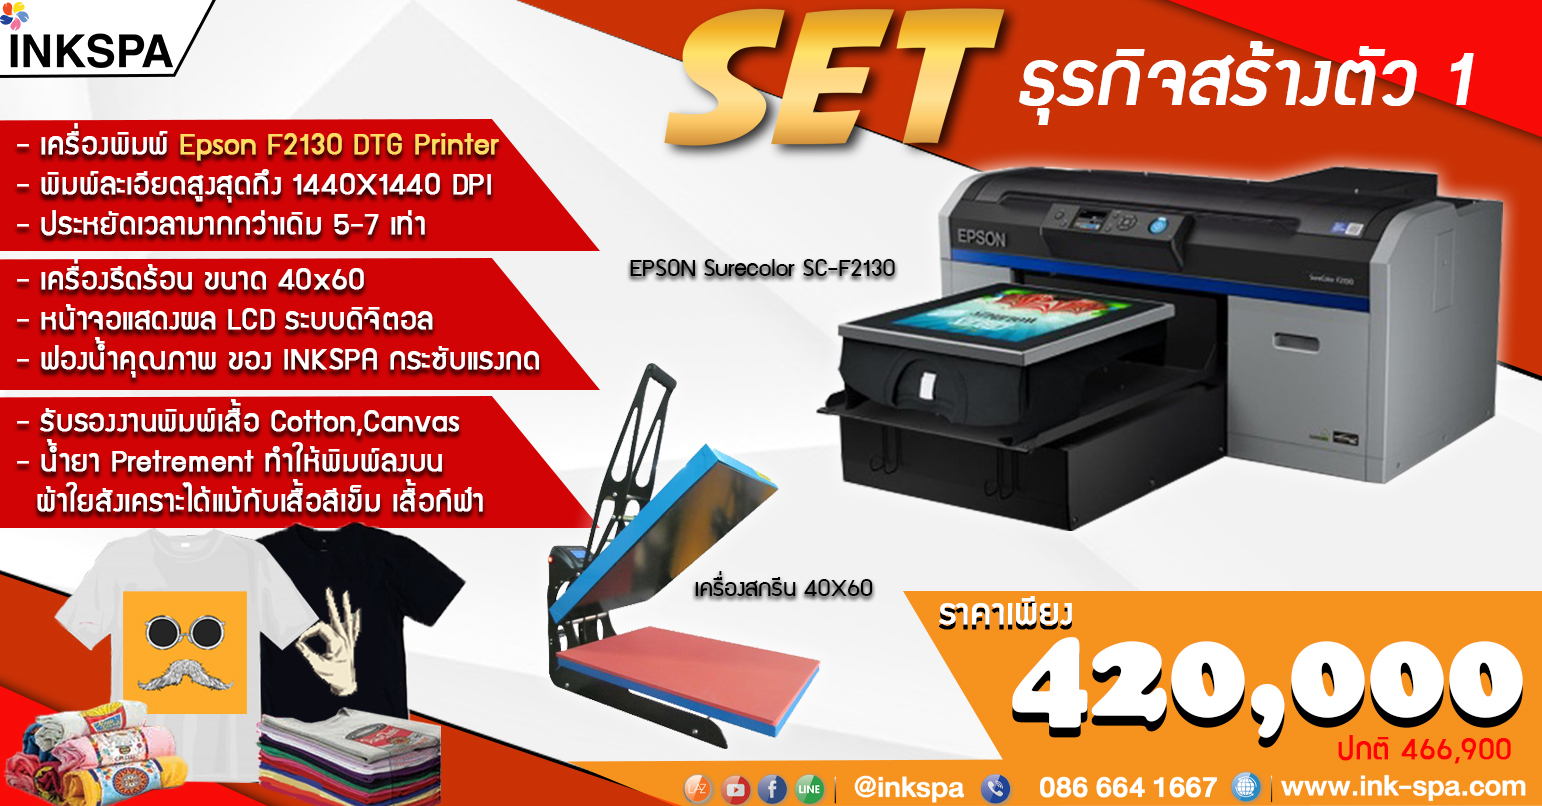 Epson F2130, เครื่องพิมพ์ DTG, เครื่องพิมพ์เสื้อ, DTG Printer, เครื่องสกรีน, เครื่องรีด, Heat Transfer, เครื่องพิมพ์เสื้อ dtg เครื่องพิมพ์dtg